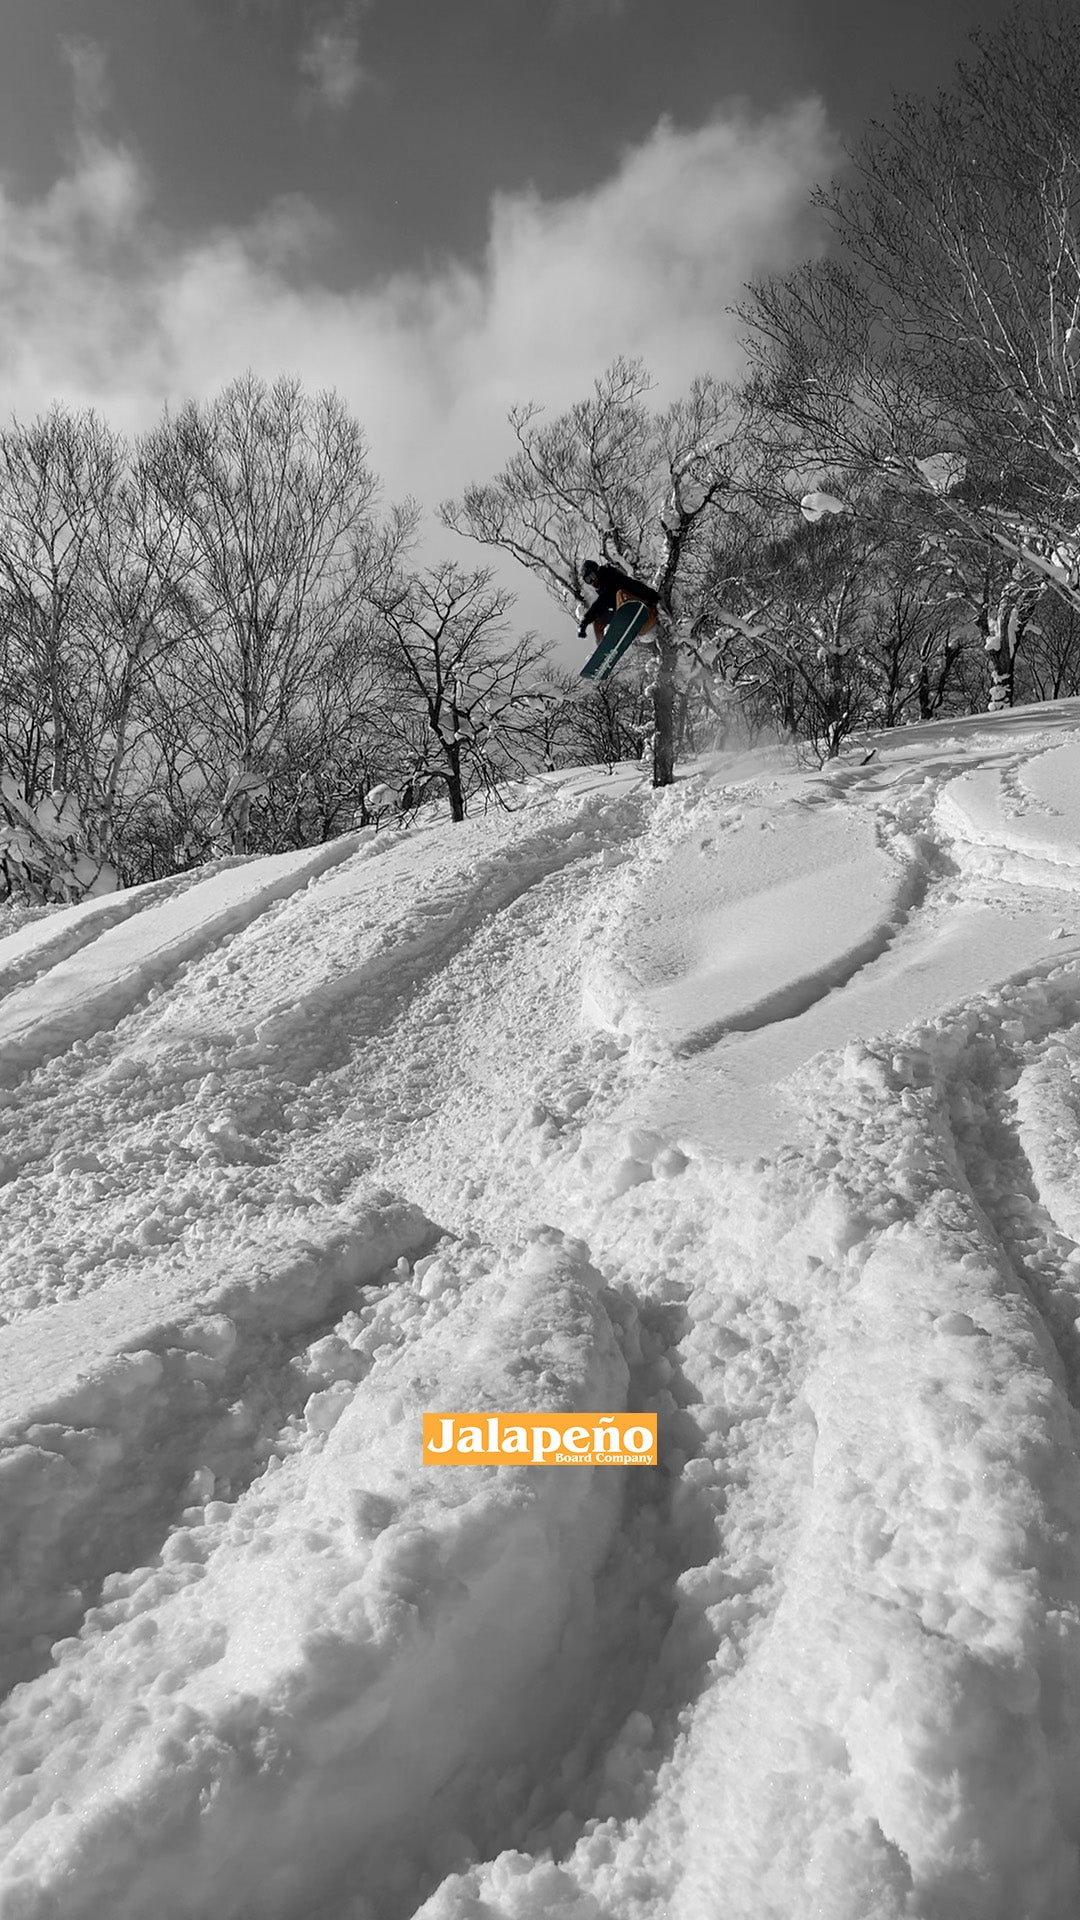 snowboarder riding custom jalapeno board company powder snowboard in niseko